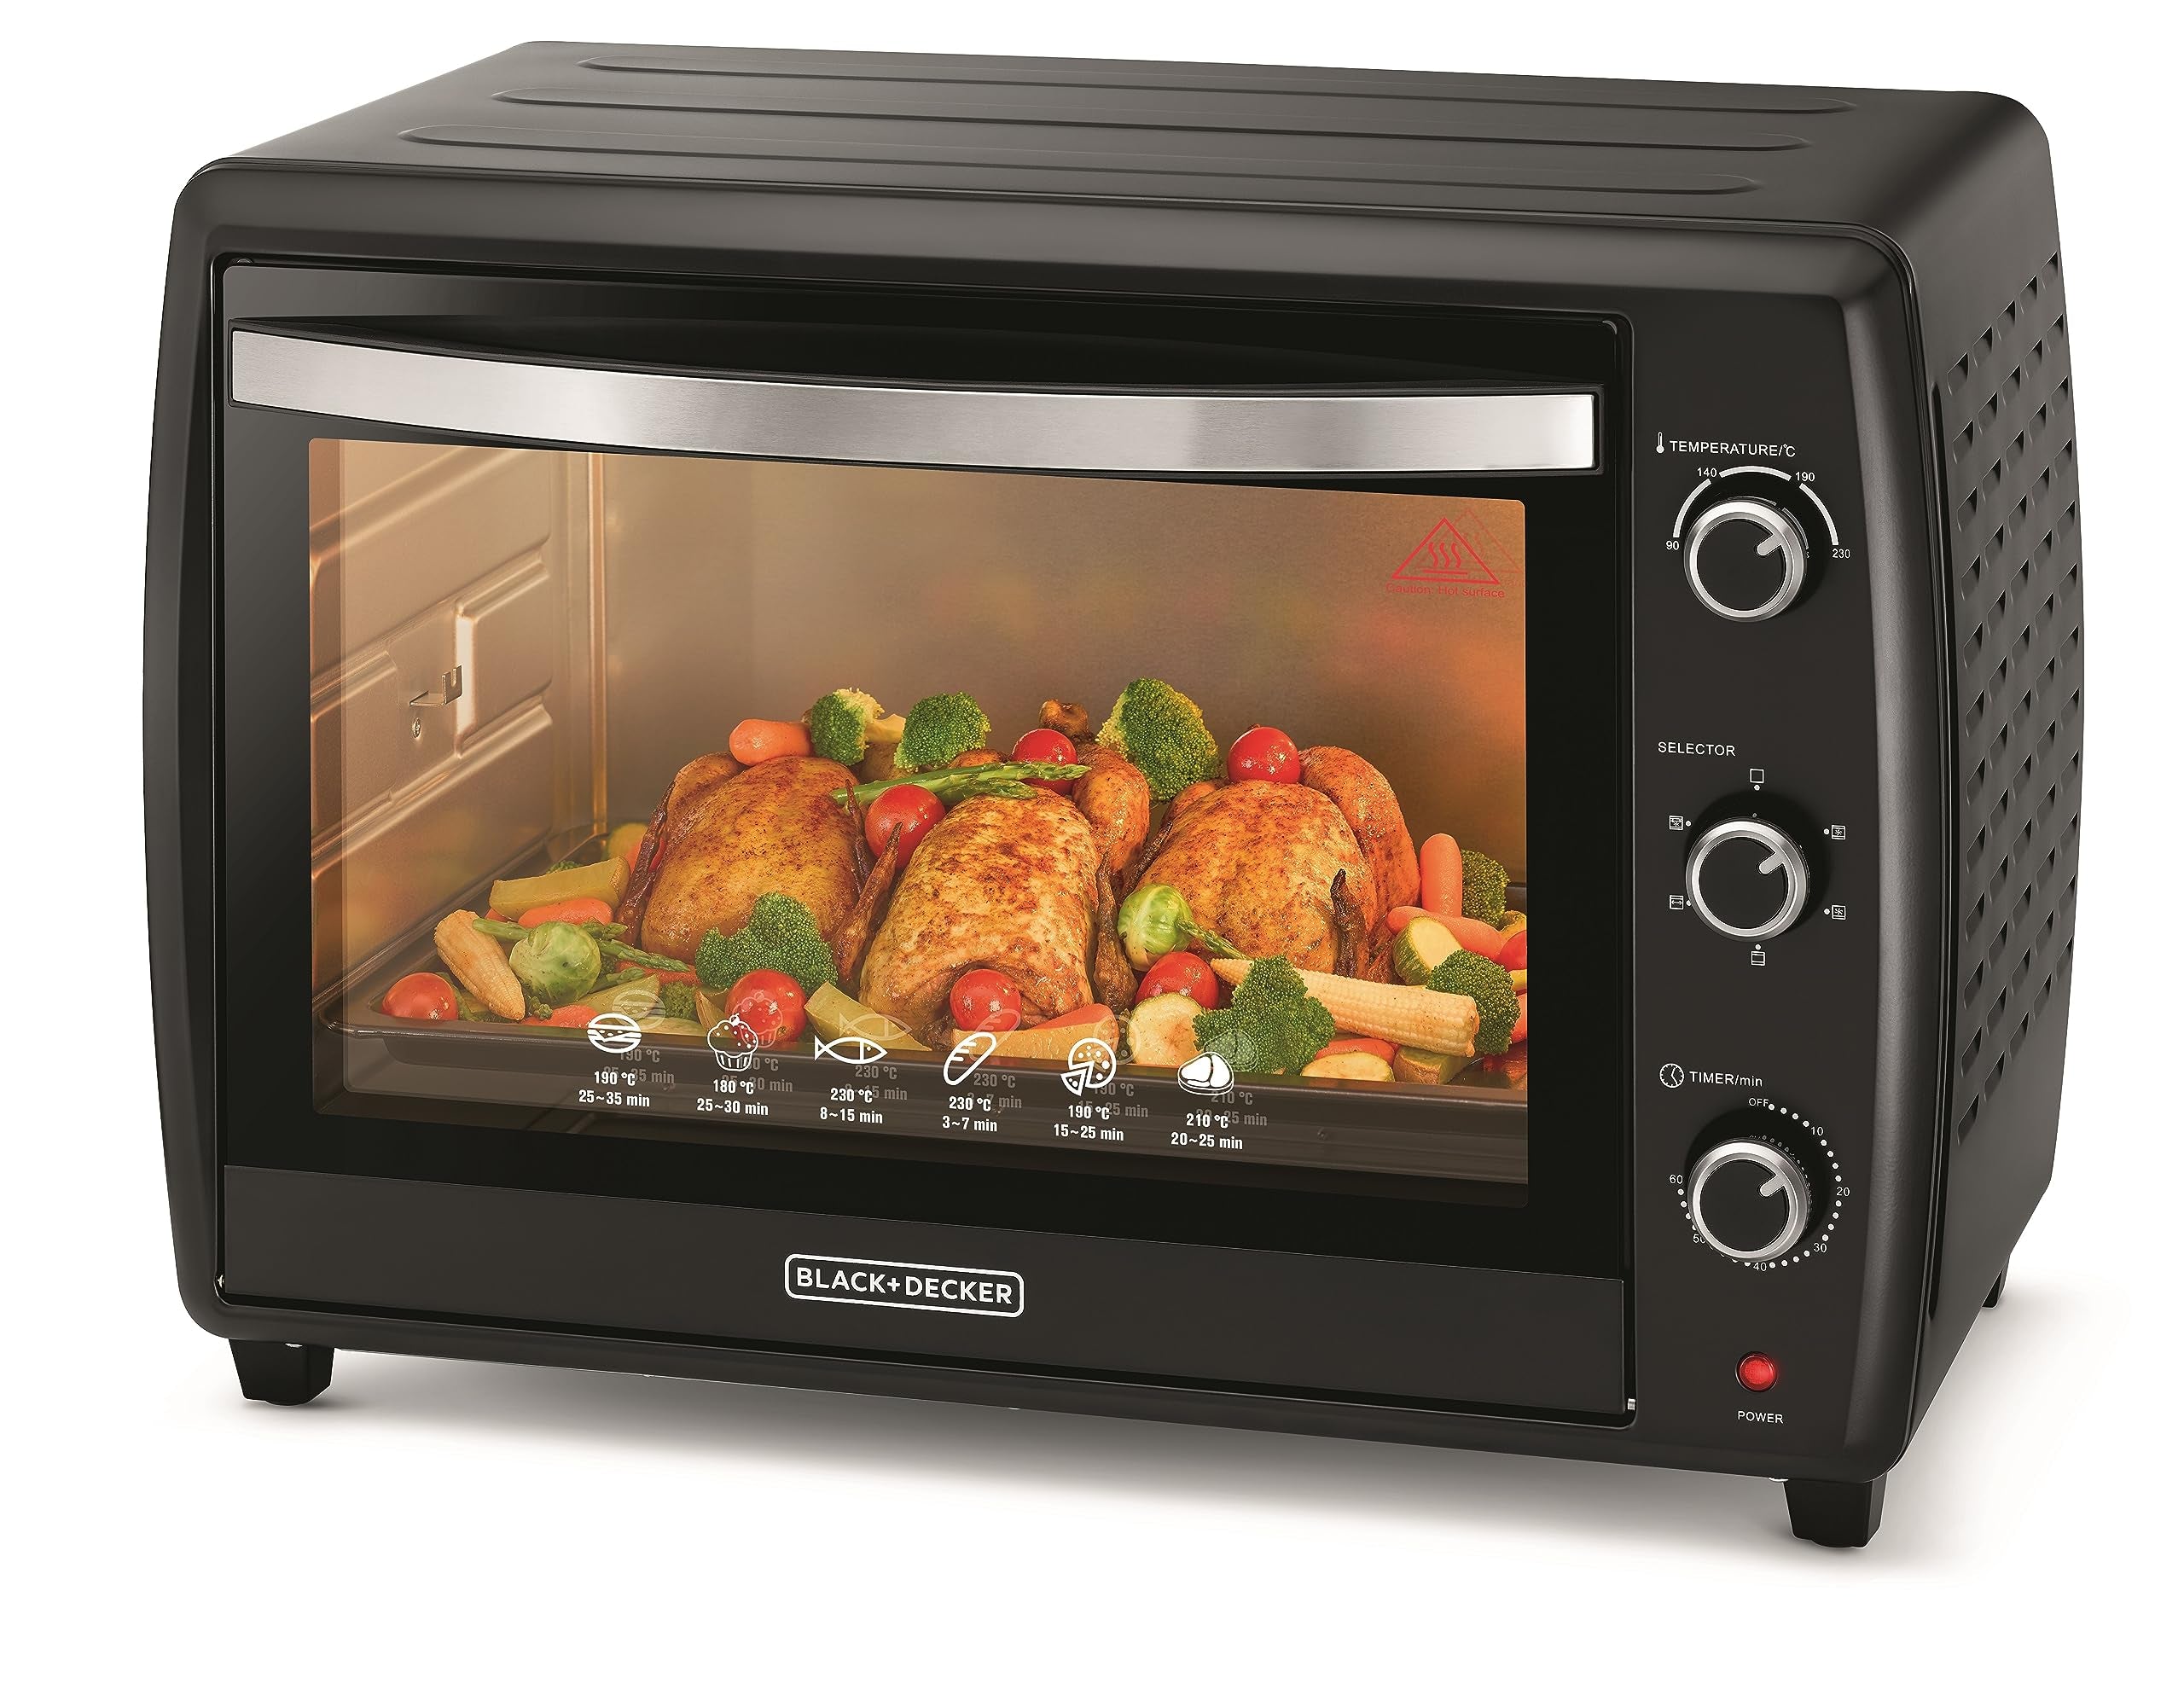 Black & Decker 2200W 70L Toaster Oven Temp Setting, Double Grill With Convection And Glass Door فرن تحميص خبز من بلاك + ديكر زجاج مزدوج، 70 لتر